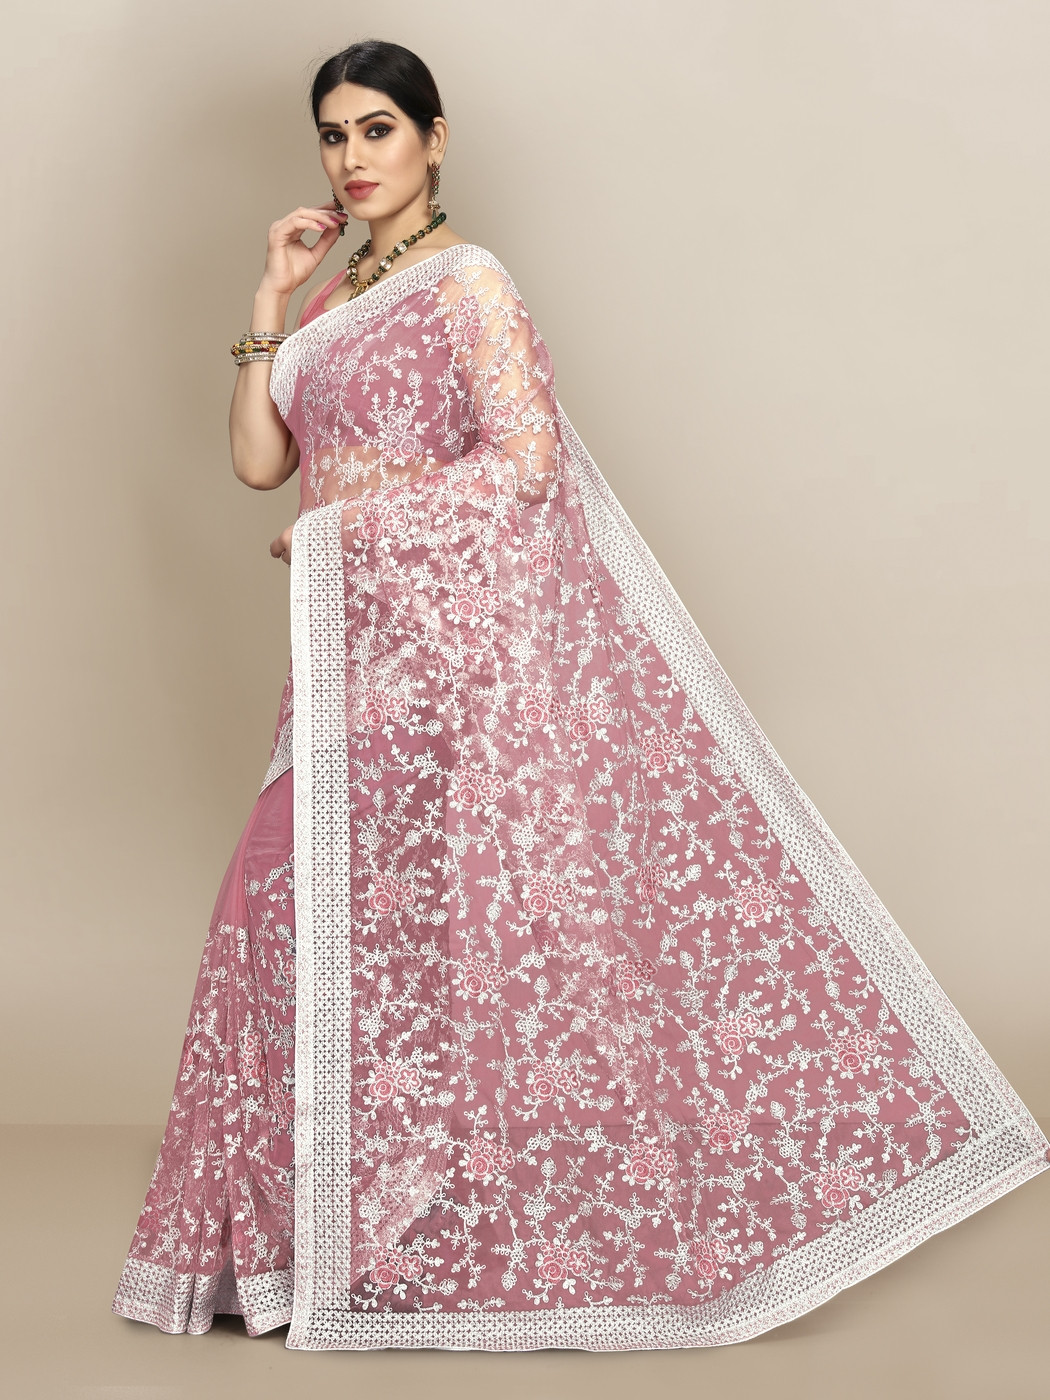 Super Net beautiful Designer Saree with extraordinary embroidery -Pink